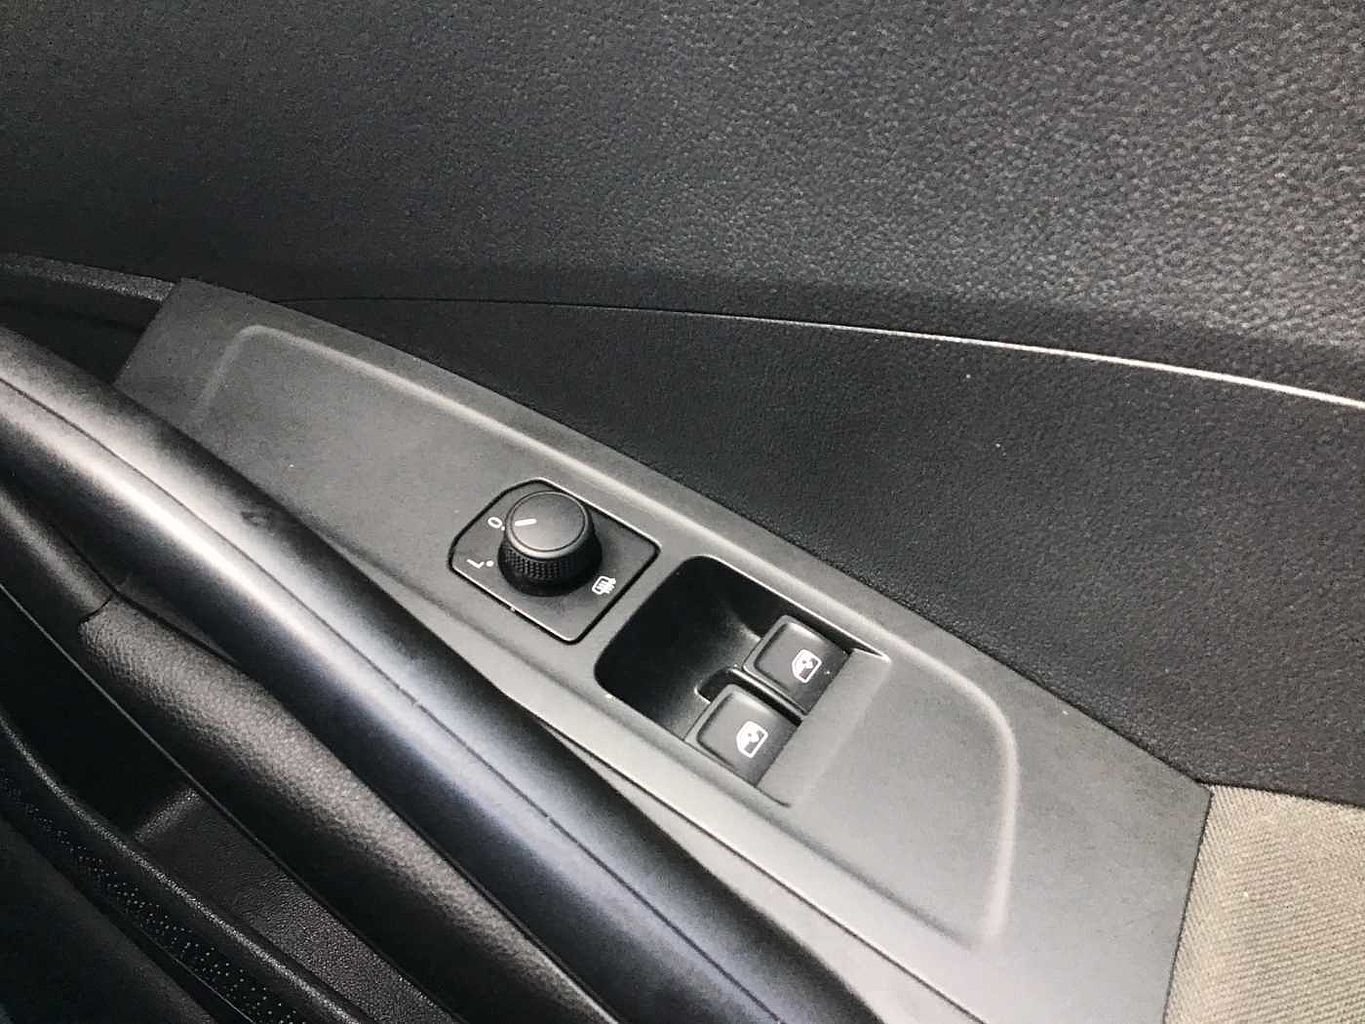 SKODA Fabia 1.0 TSI (95ps) SE Comfort Hatchback